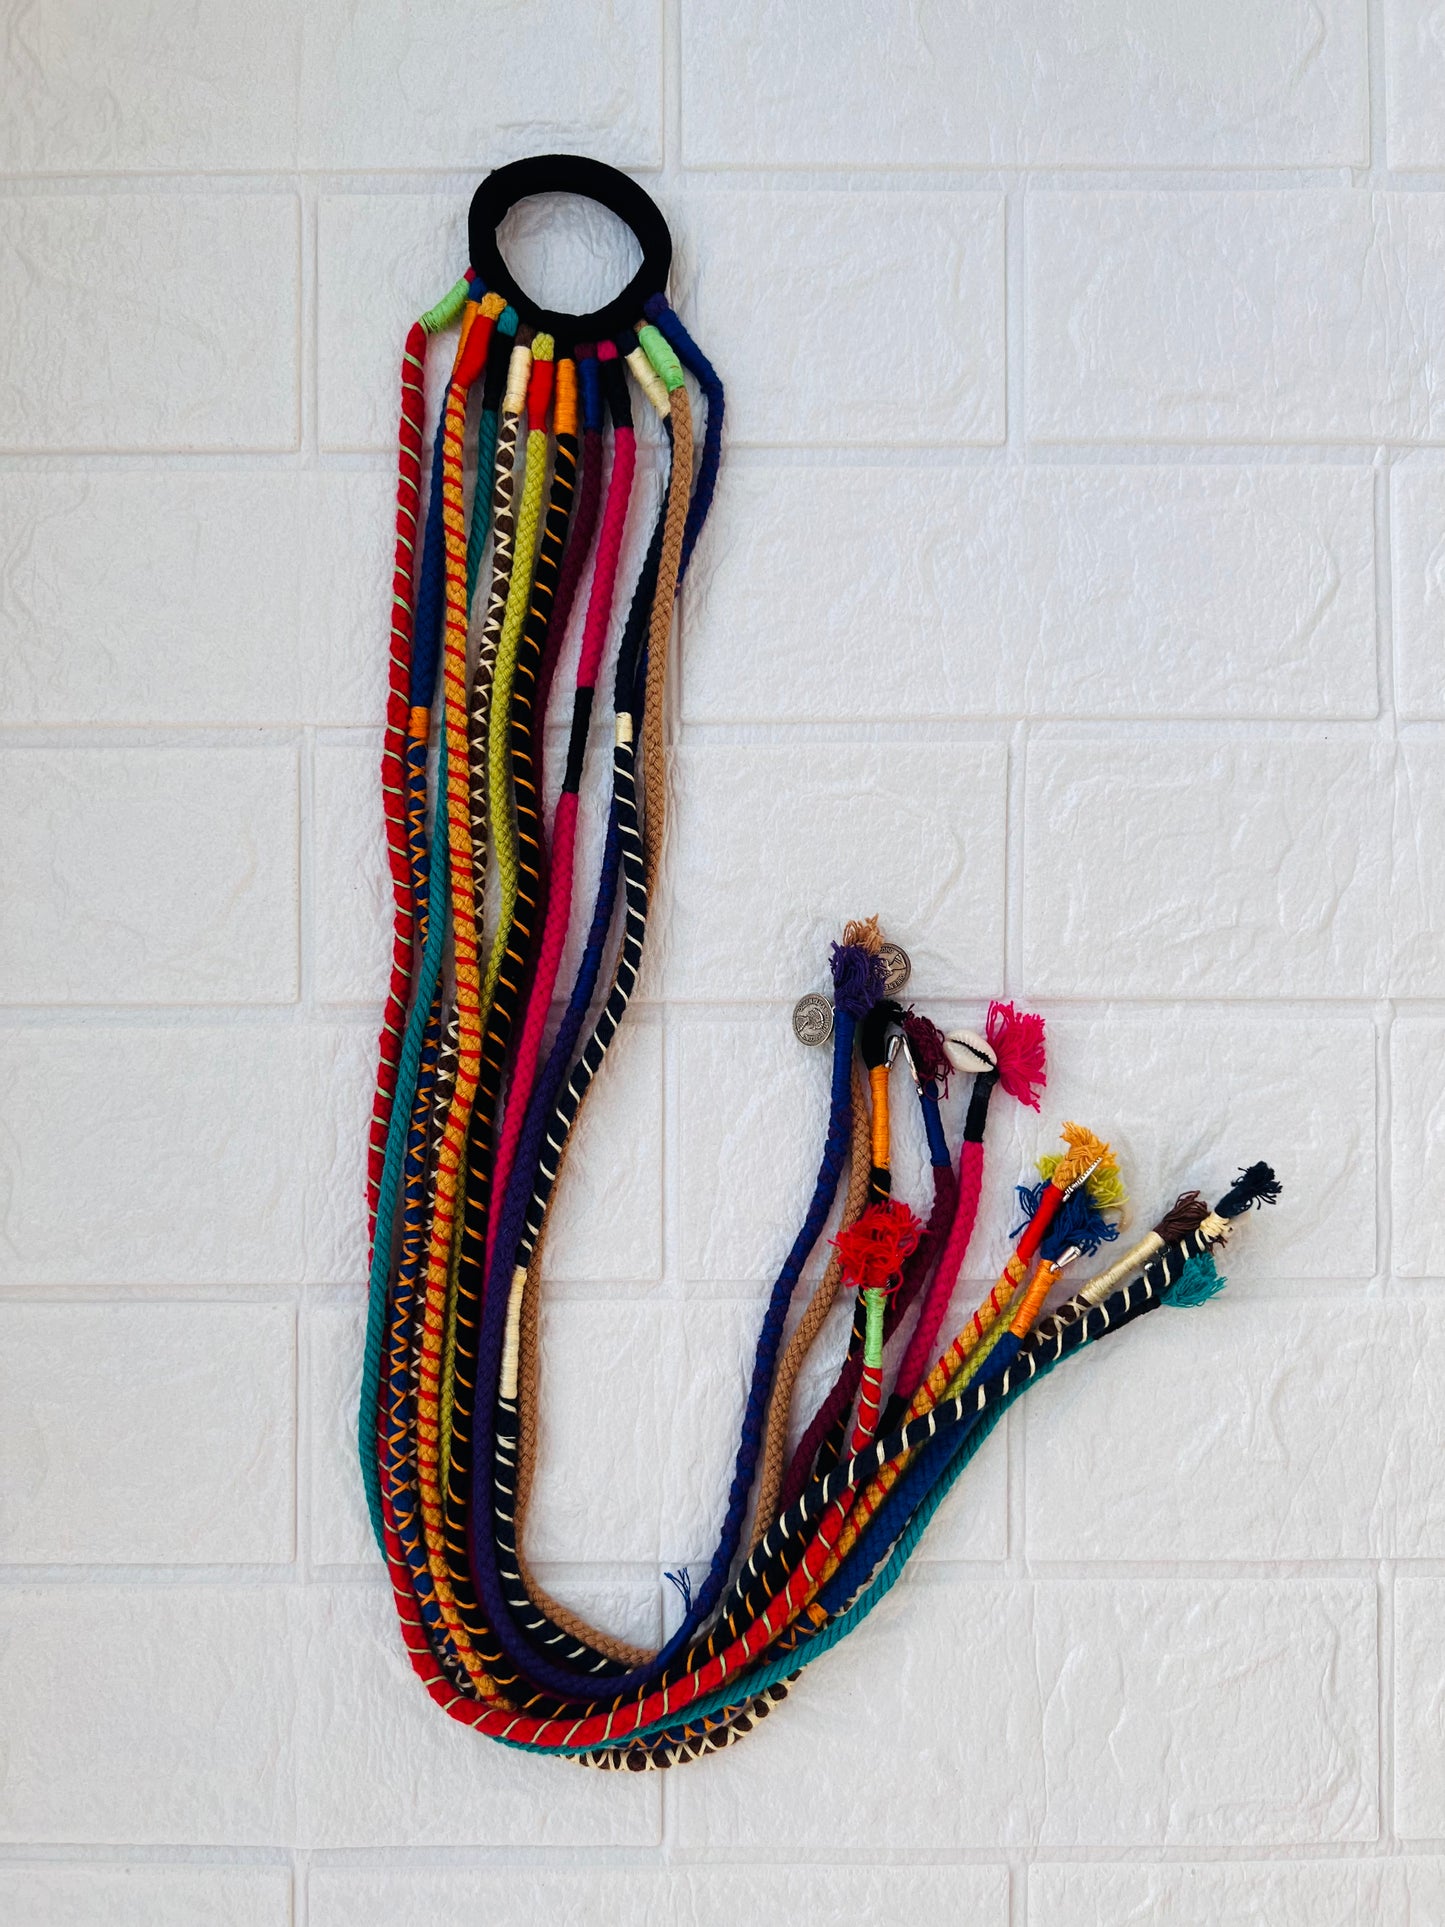 Multicoloured hair strings